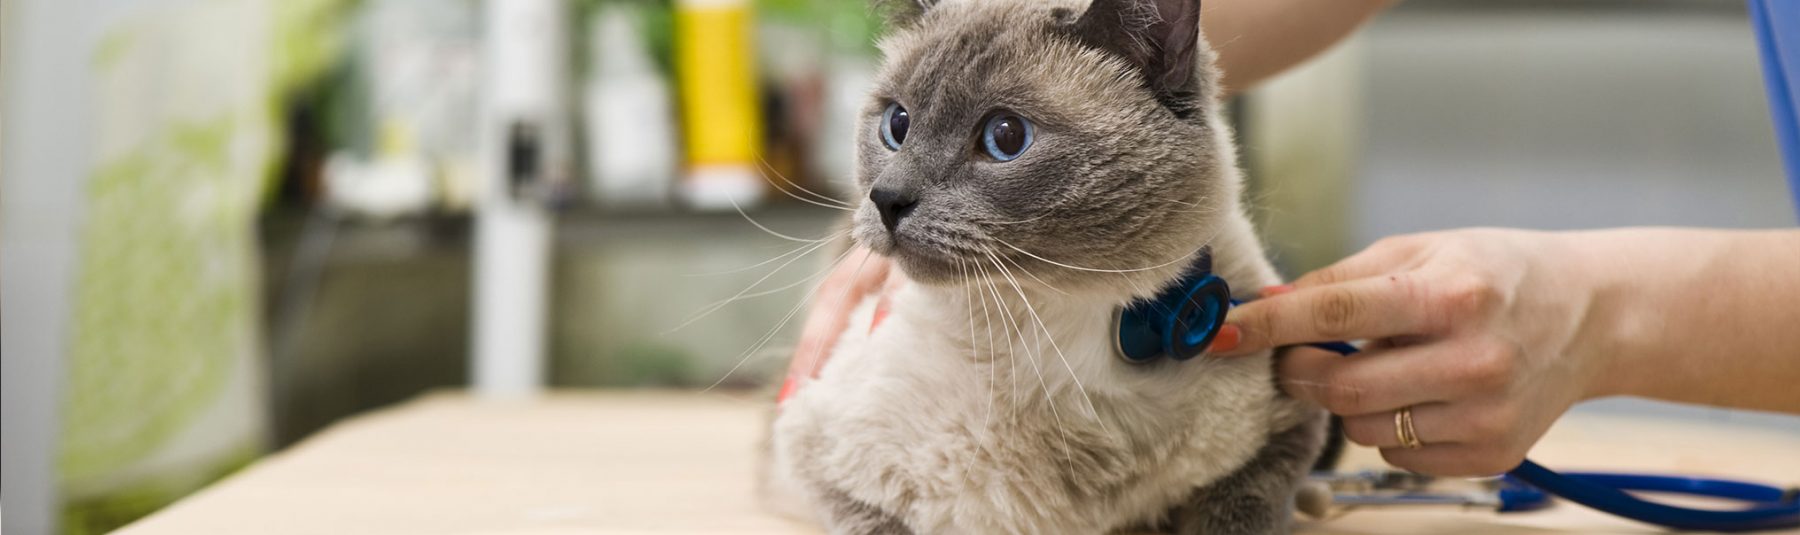 Cat Vaccinations Feline Shots & Treatments Moncton Animal Hospital